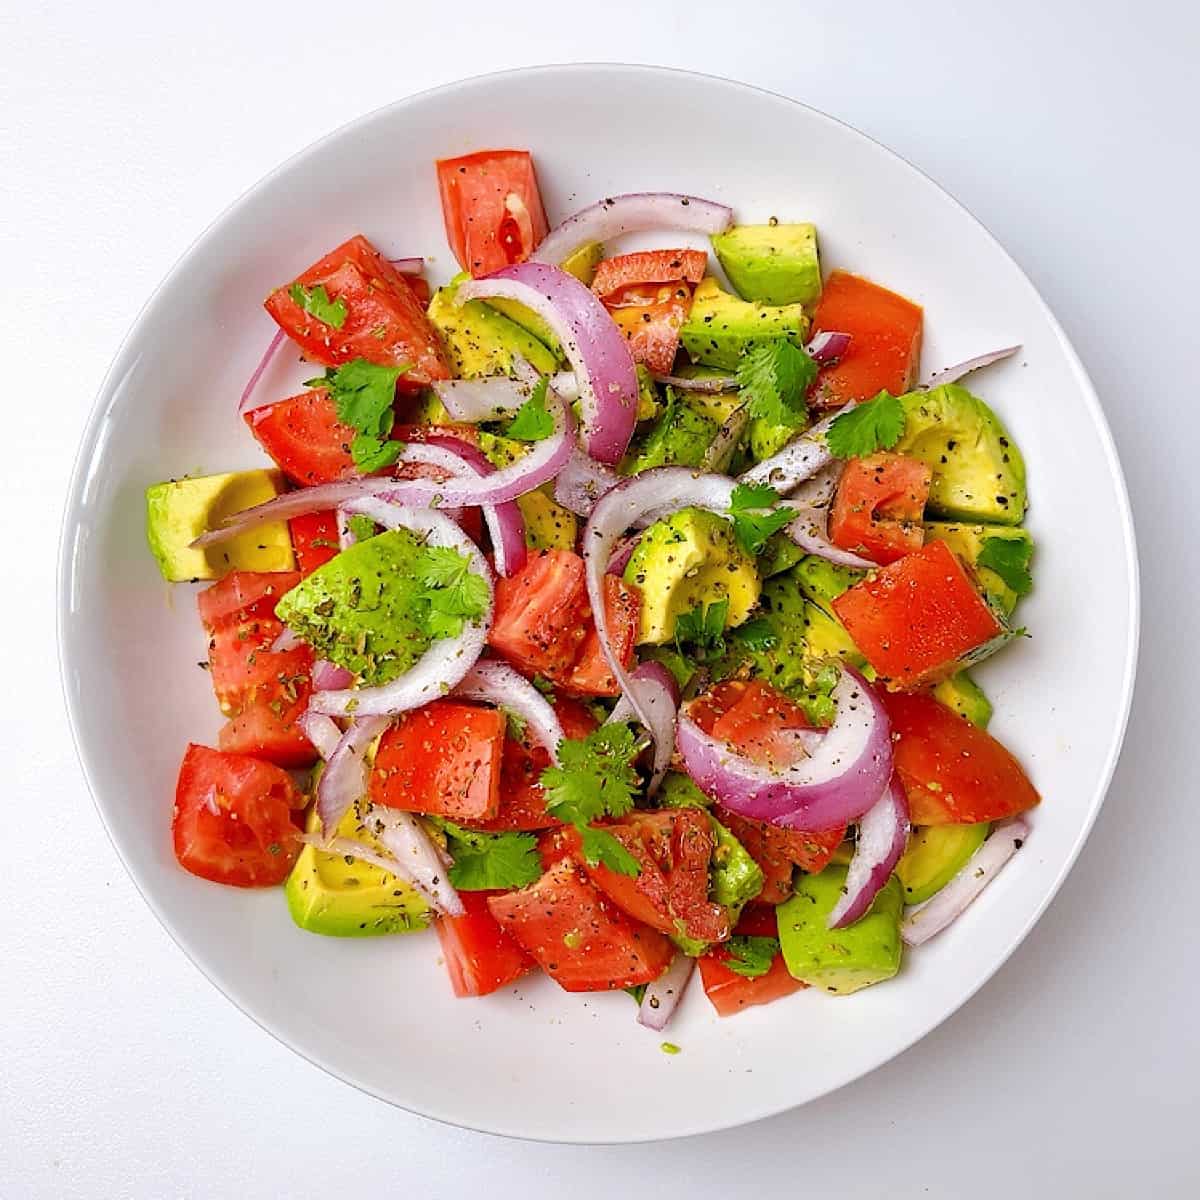 Tomato and avocado salad in a white bowl